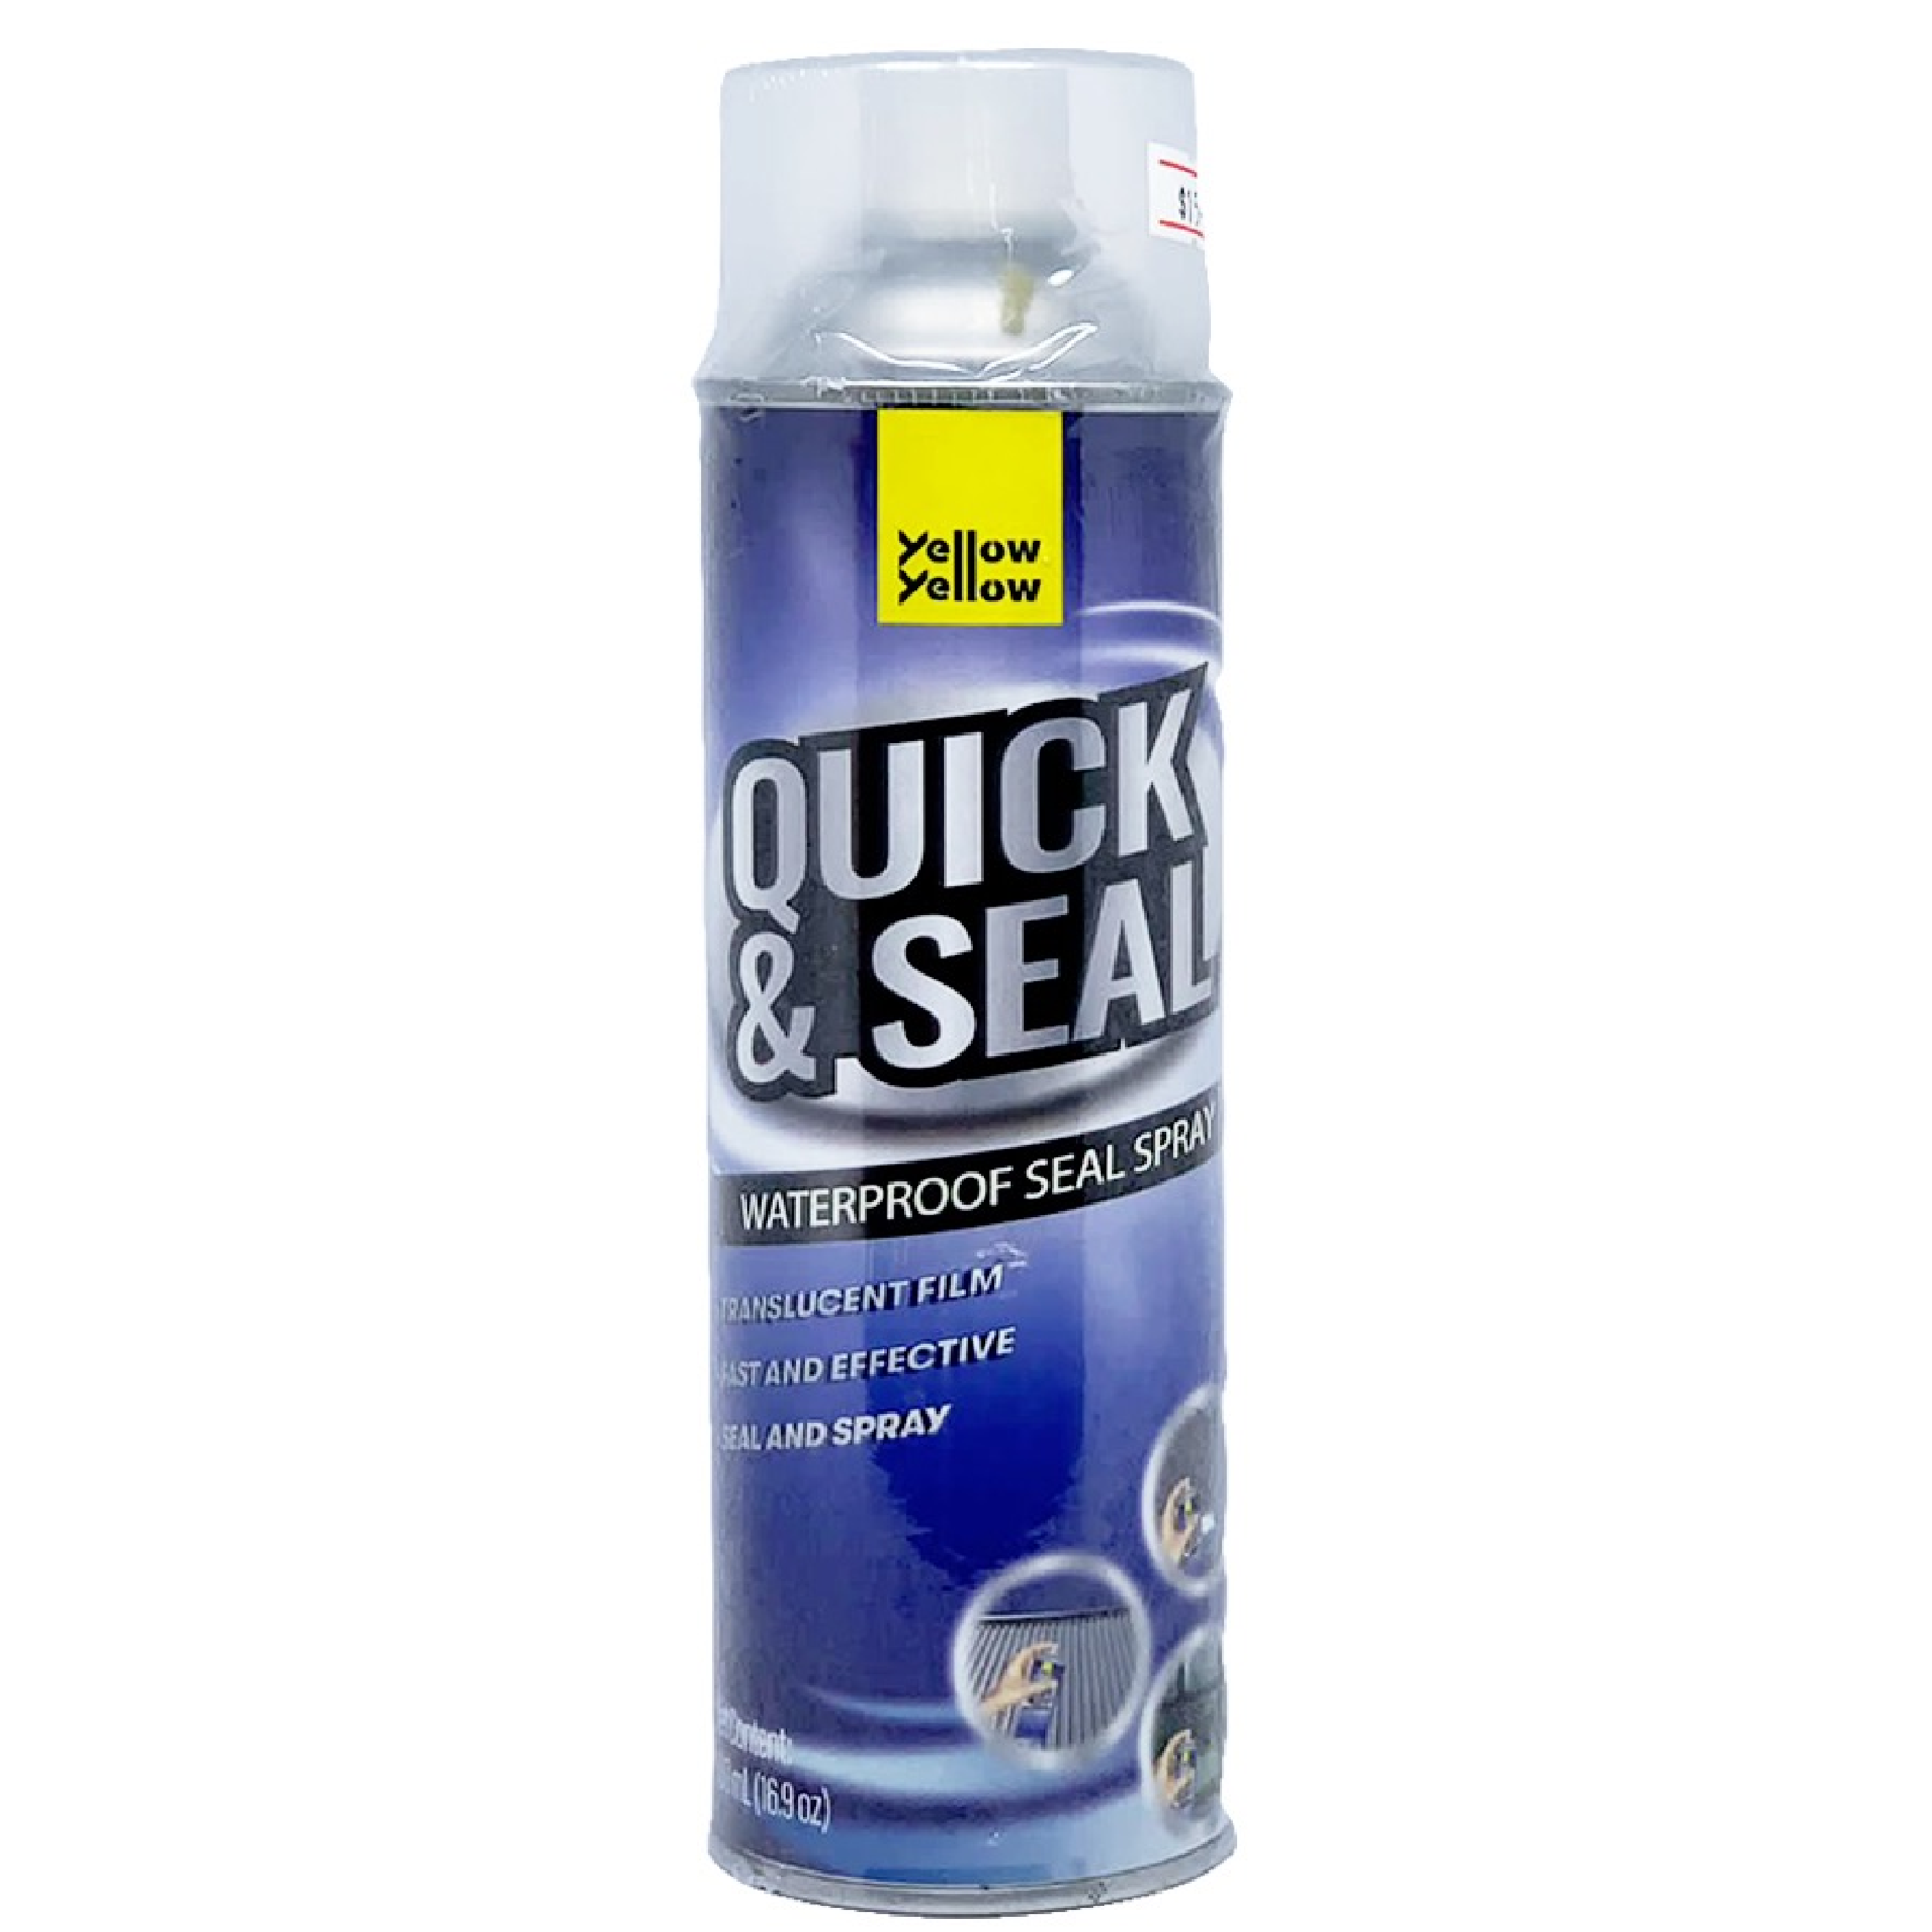 Yellowyellow QUICK & SEAL Waterproof SEAL SPRAY (Translucent)